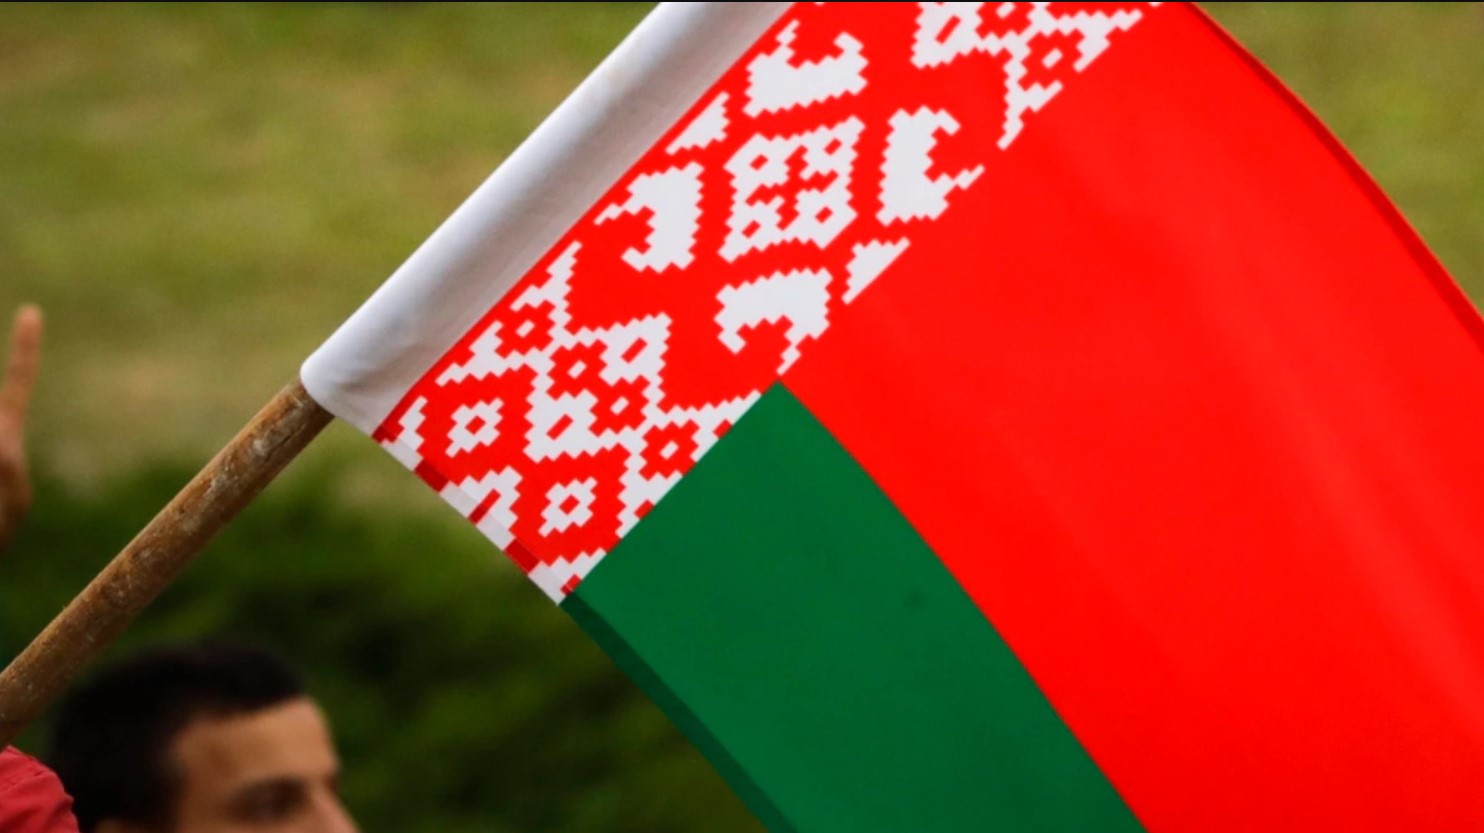 В Польше топтали и пачкали флаг Беларуси: возбуждено дело